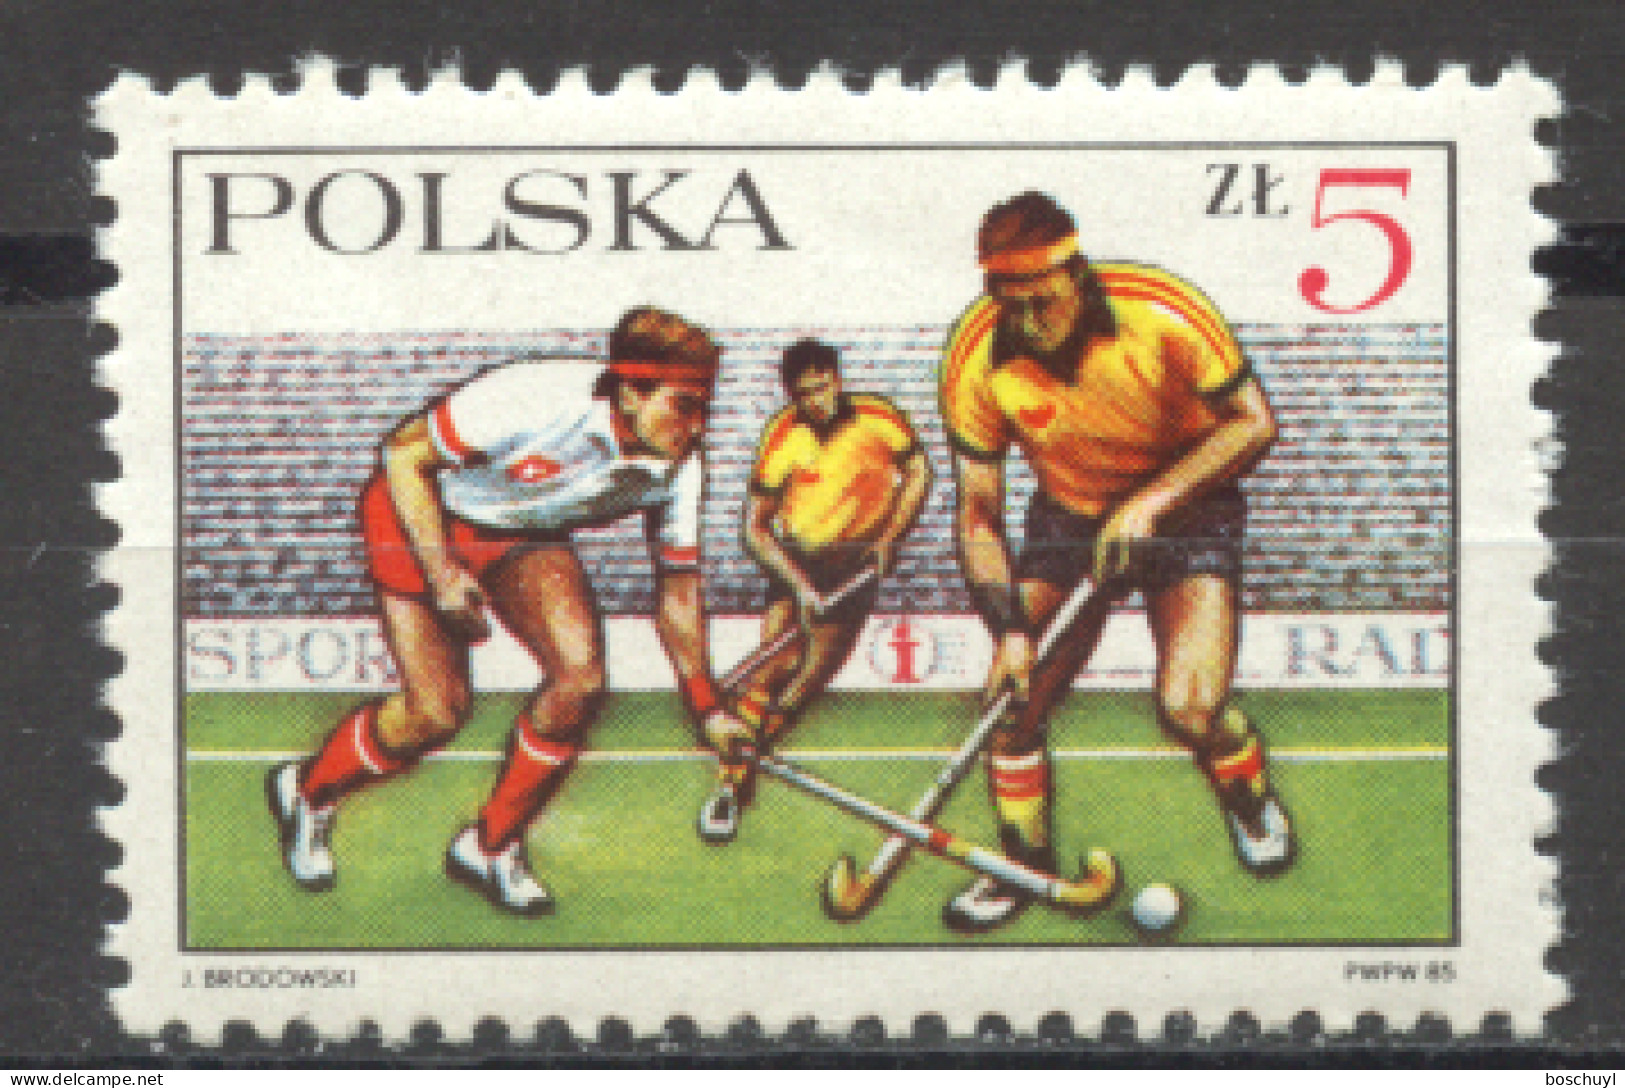 Poland, 1985, Field Hockey, Sports, MNH, Michel 2990 - Neufs